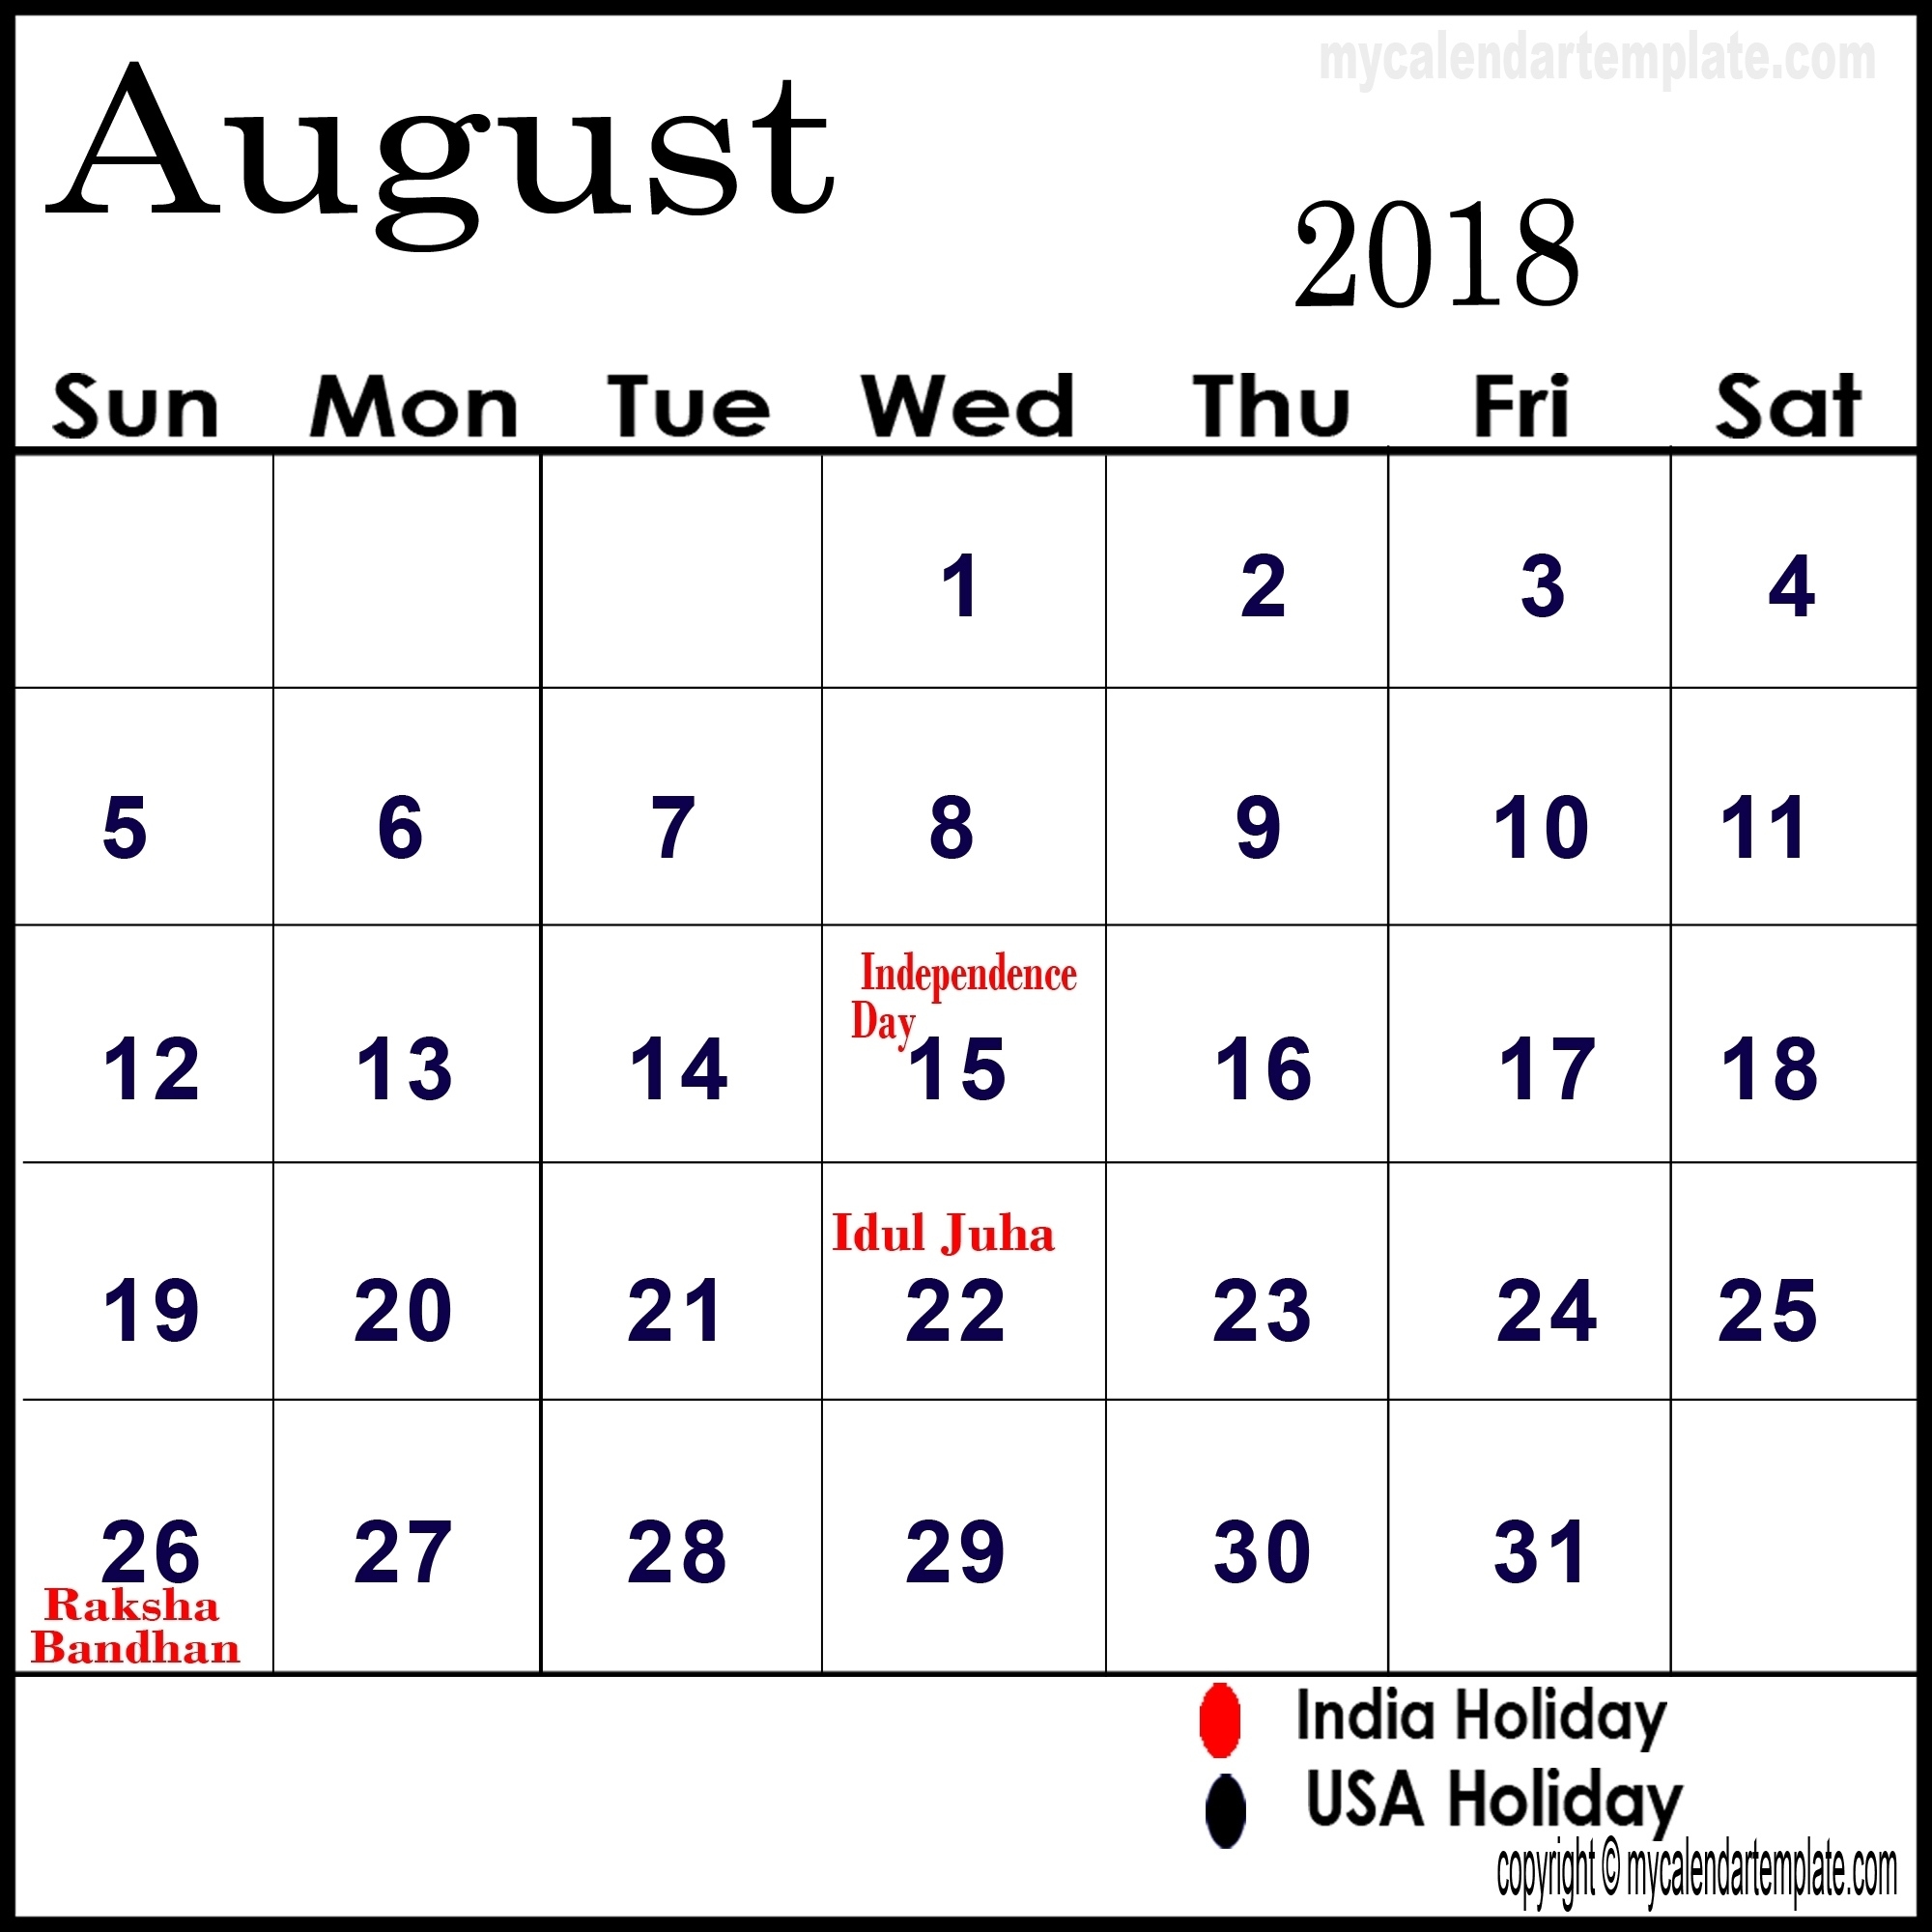 August 2018 Calendar Holidays - Free Printable Calendar, Blank Calendar Holidays For August